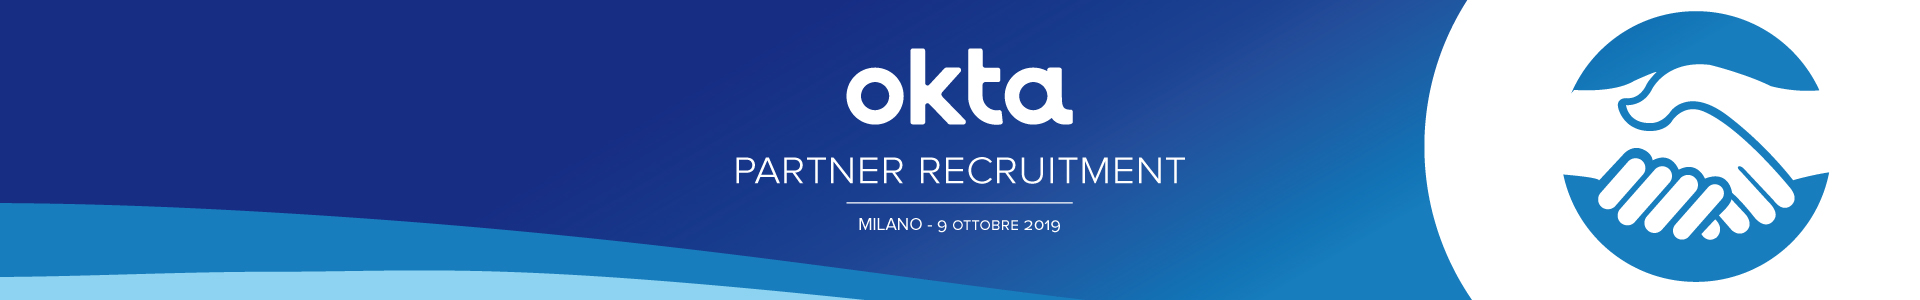 okta Partner Recruitment | Bludis